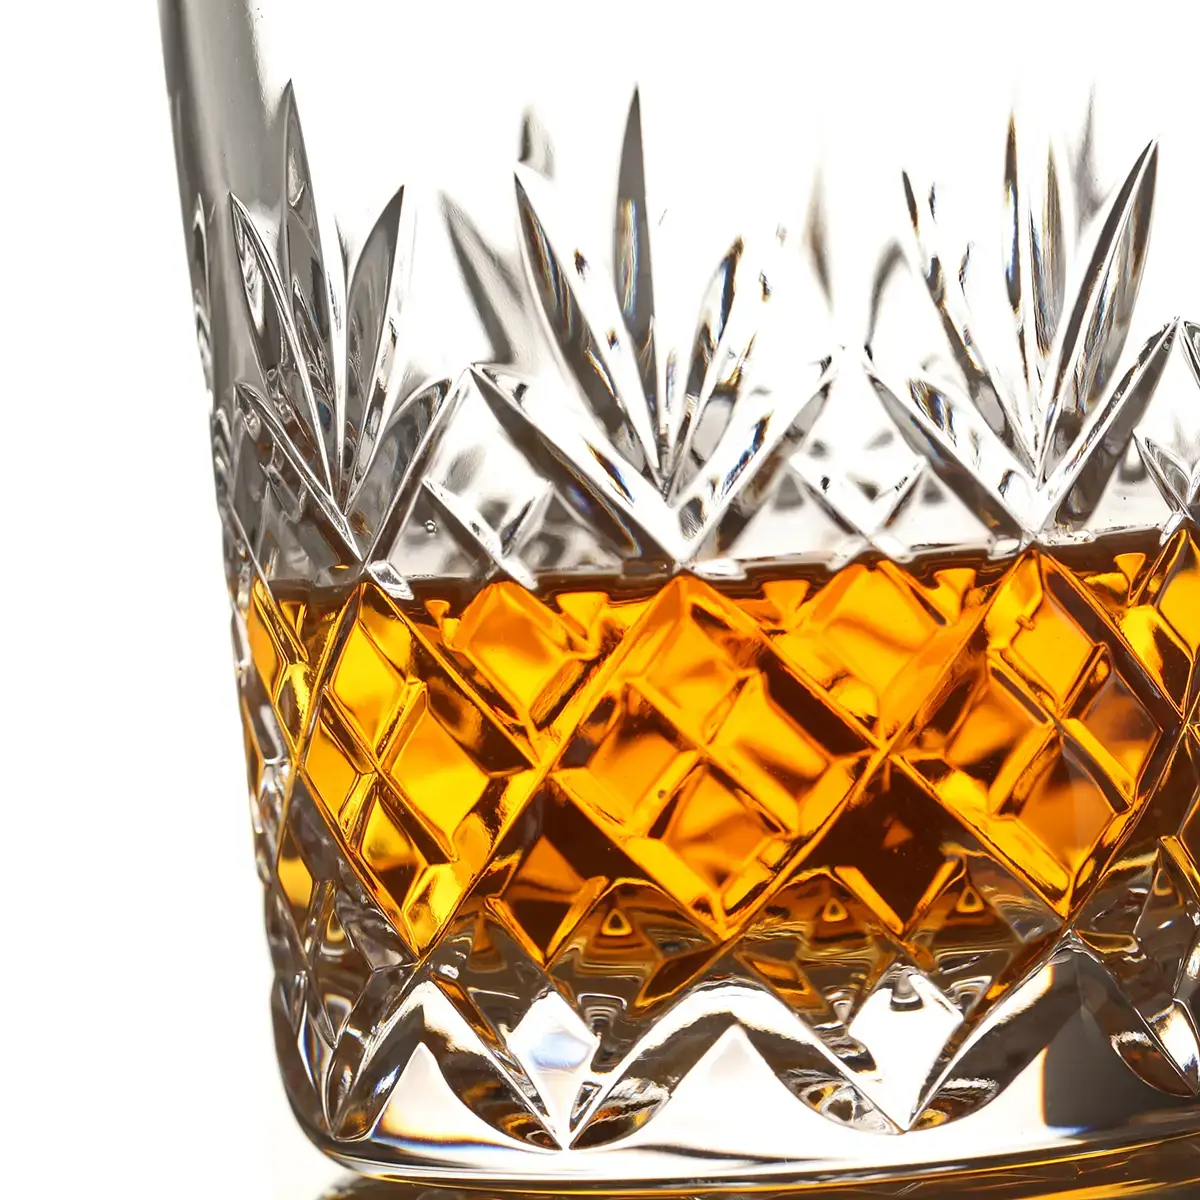 Edinburgh - Whisky Tumbler - Handgefertigt aus Kristallglas